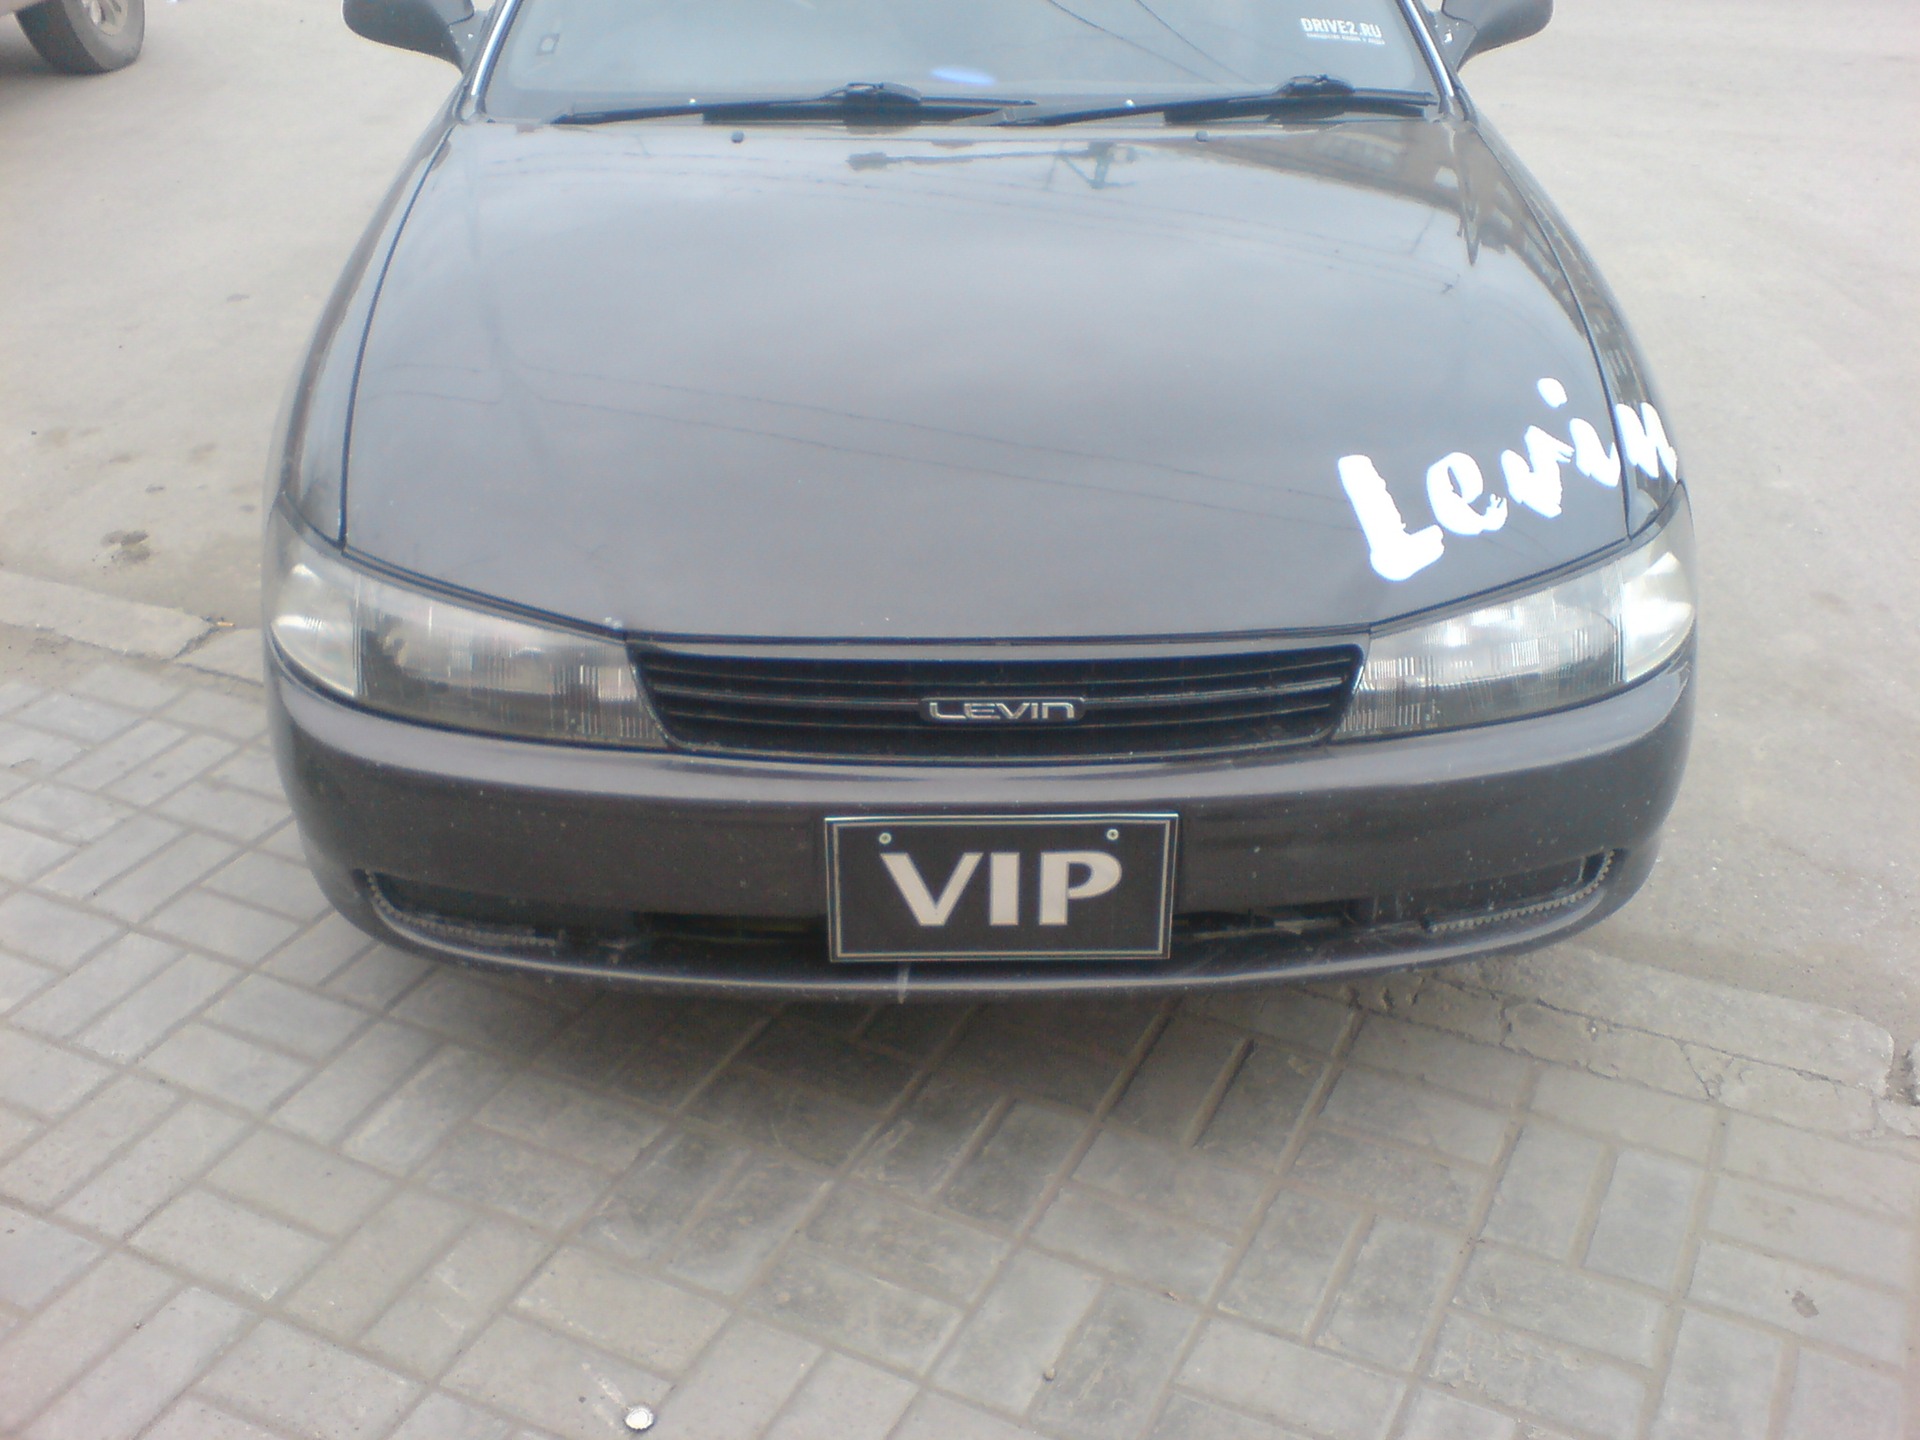    Toyota Corolla Levin 16 1993